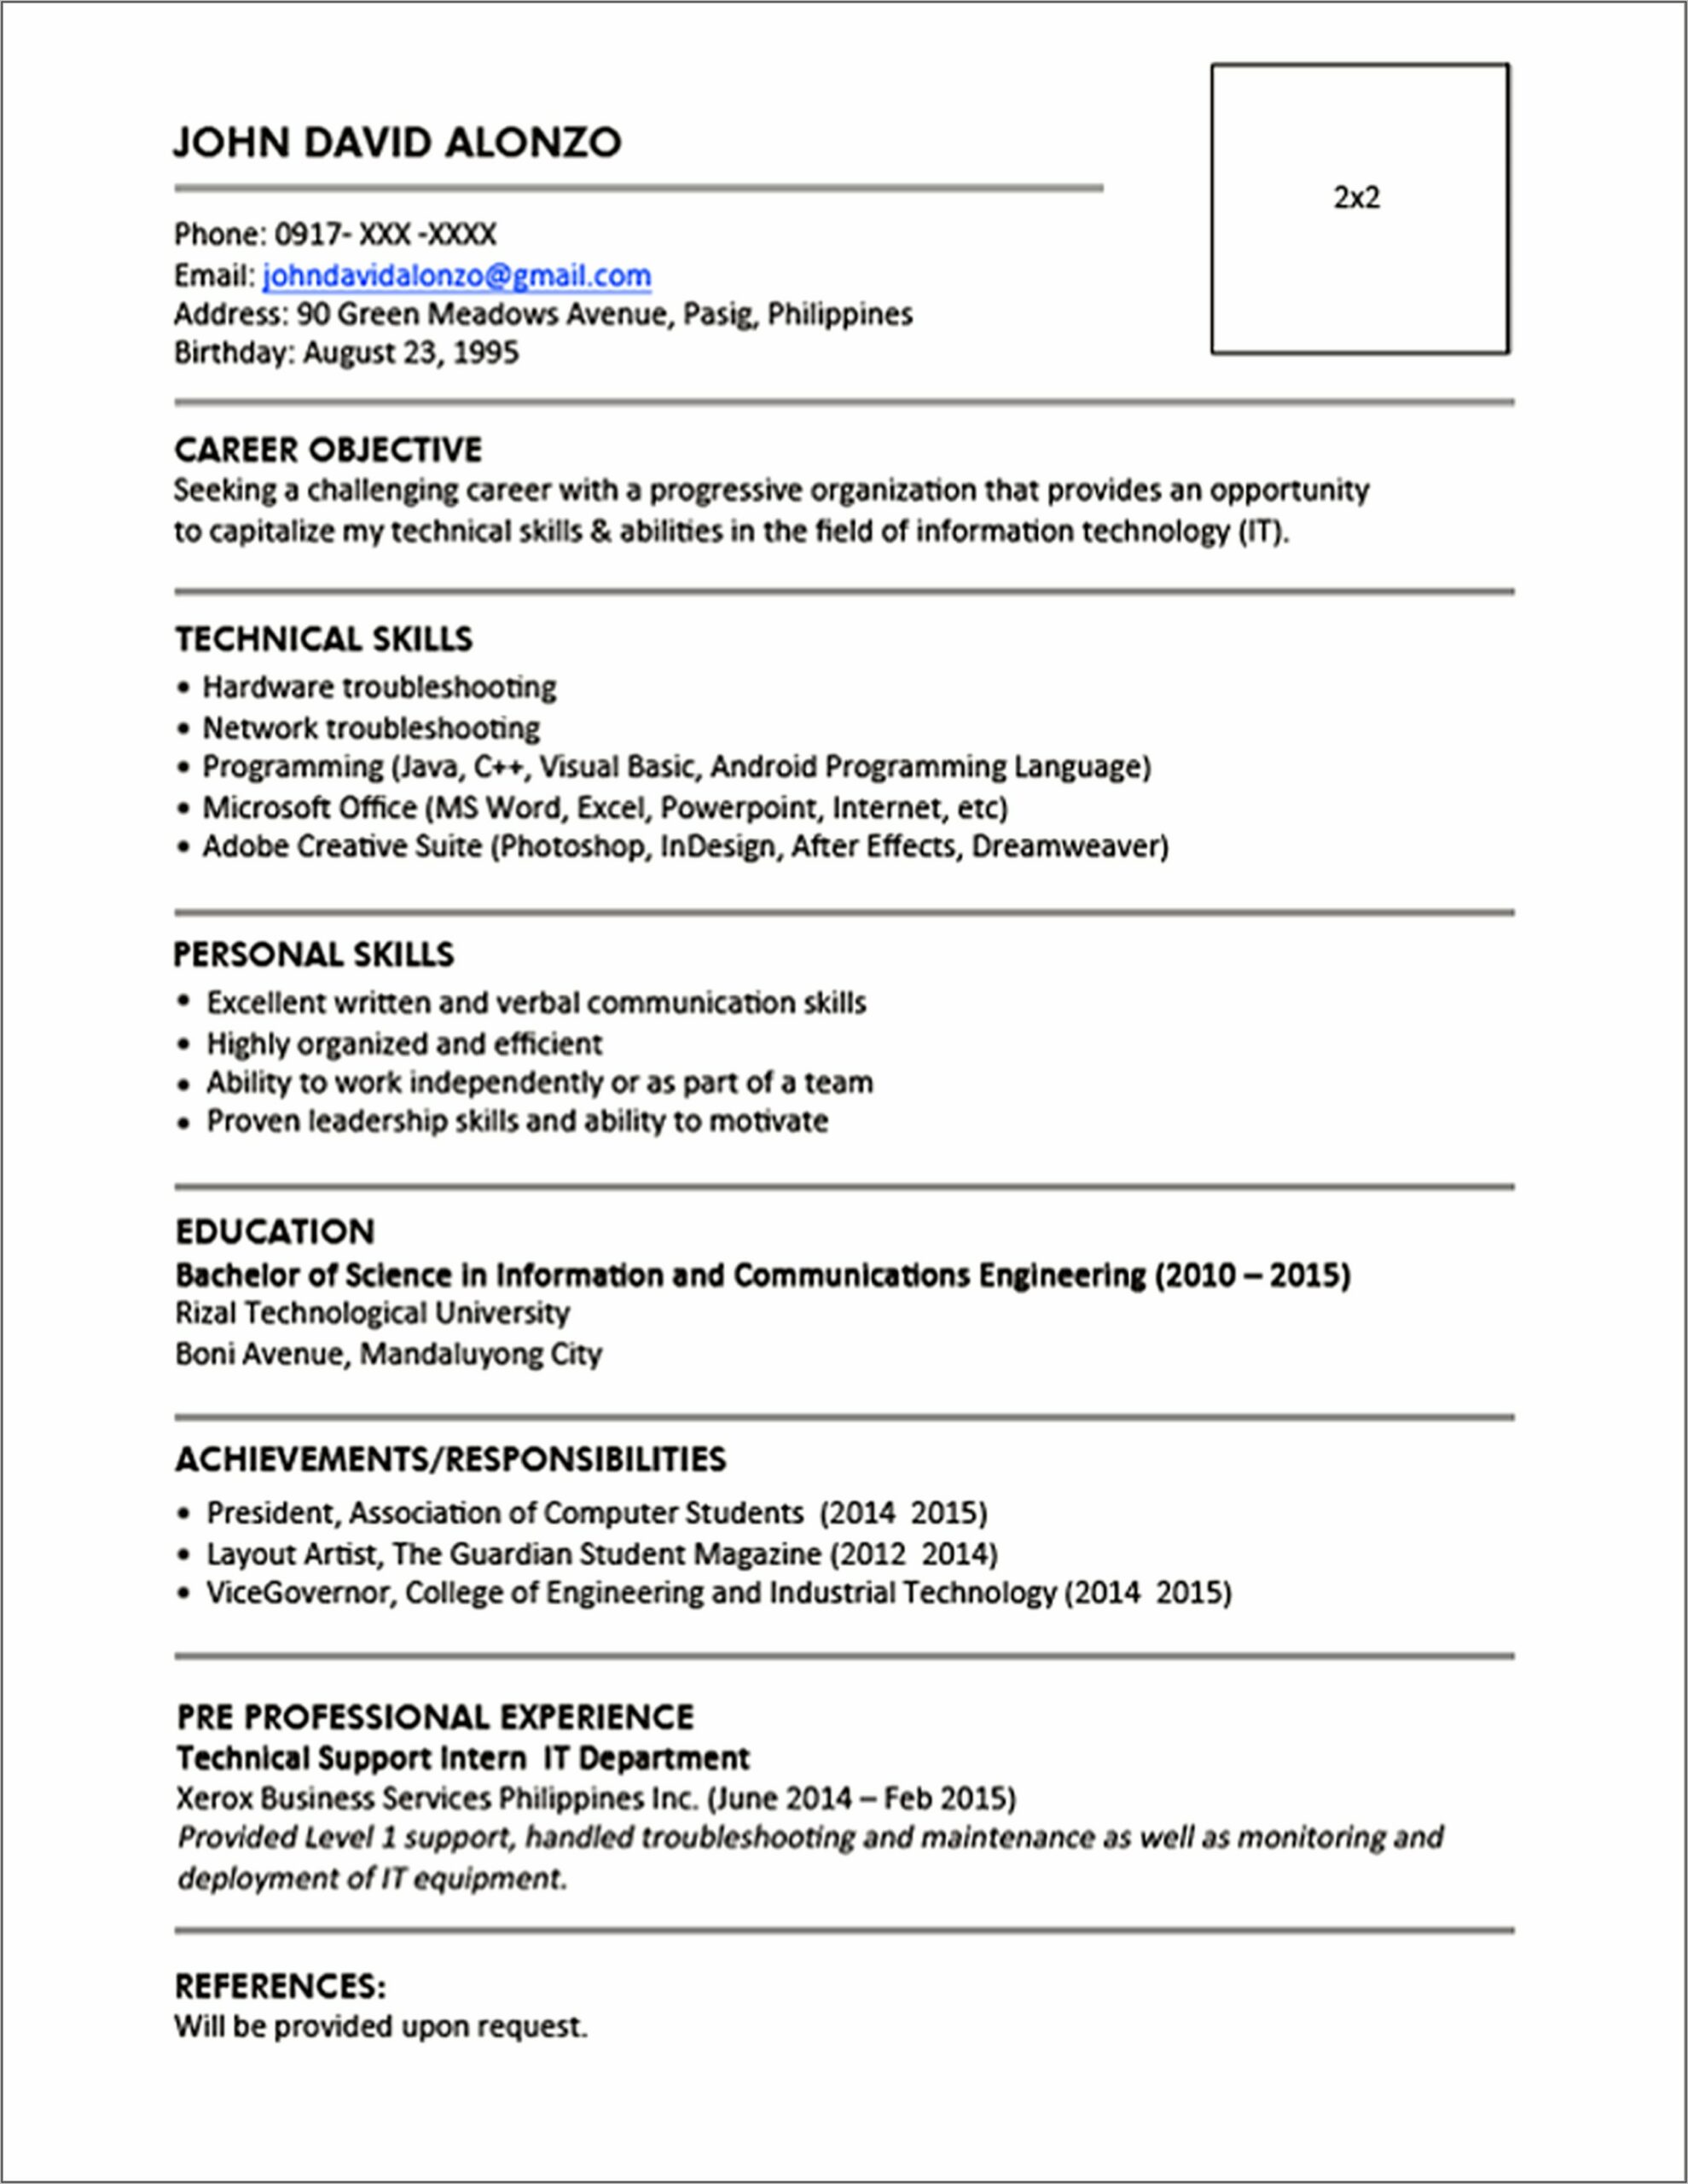 Cv Resume Format Sample For Graduate Work